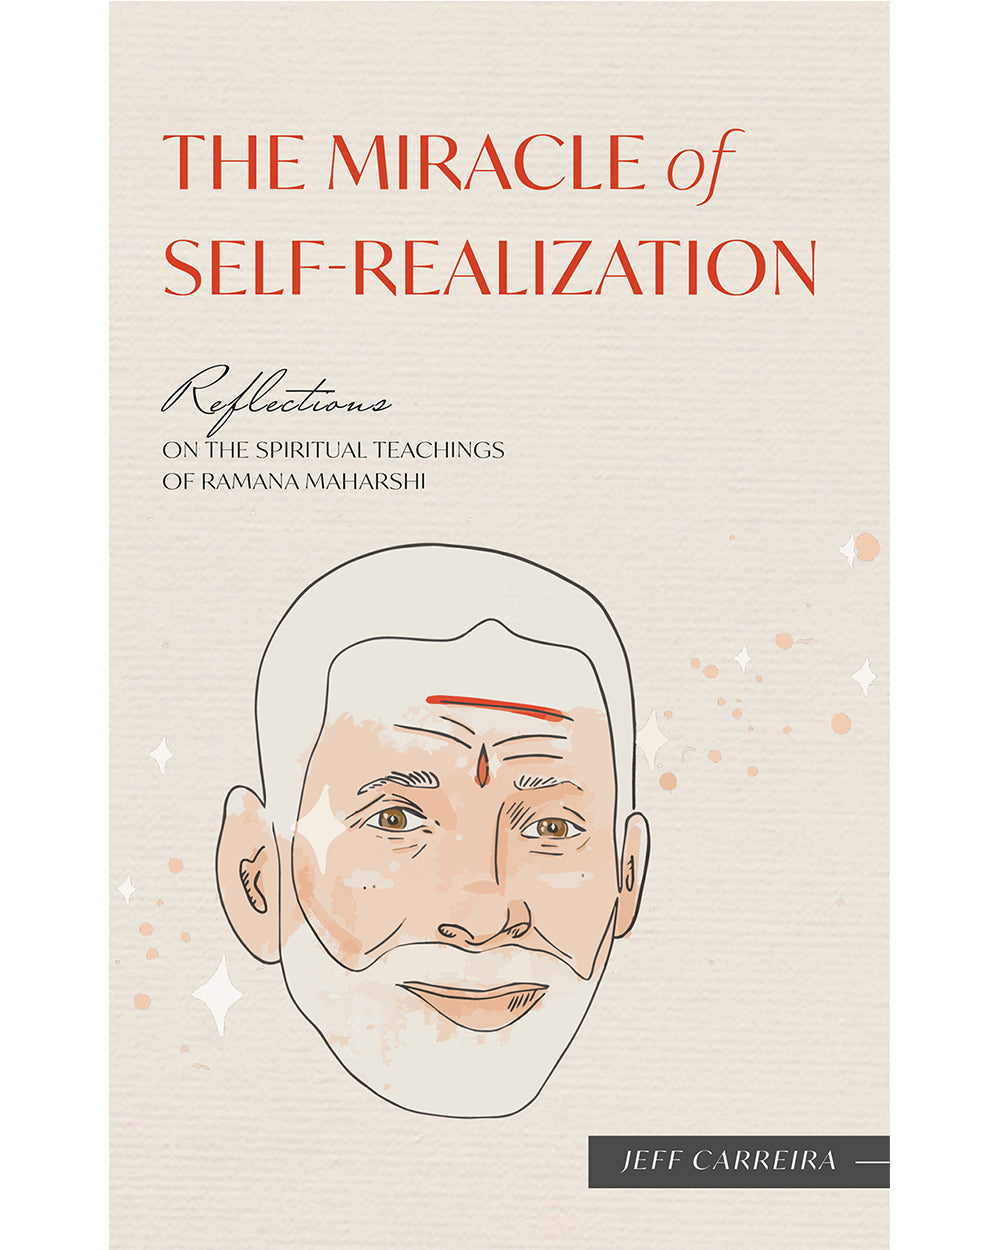 The Miracle of Self Realization: Reflections on the Spiritual Teachings of Ramana Maharshi